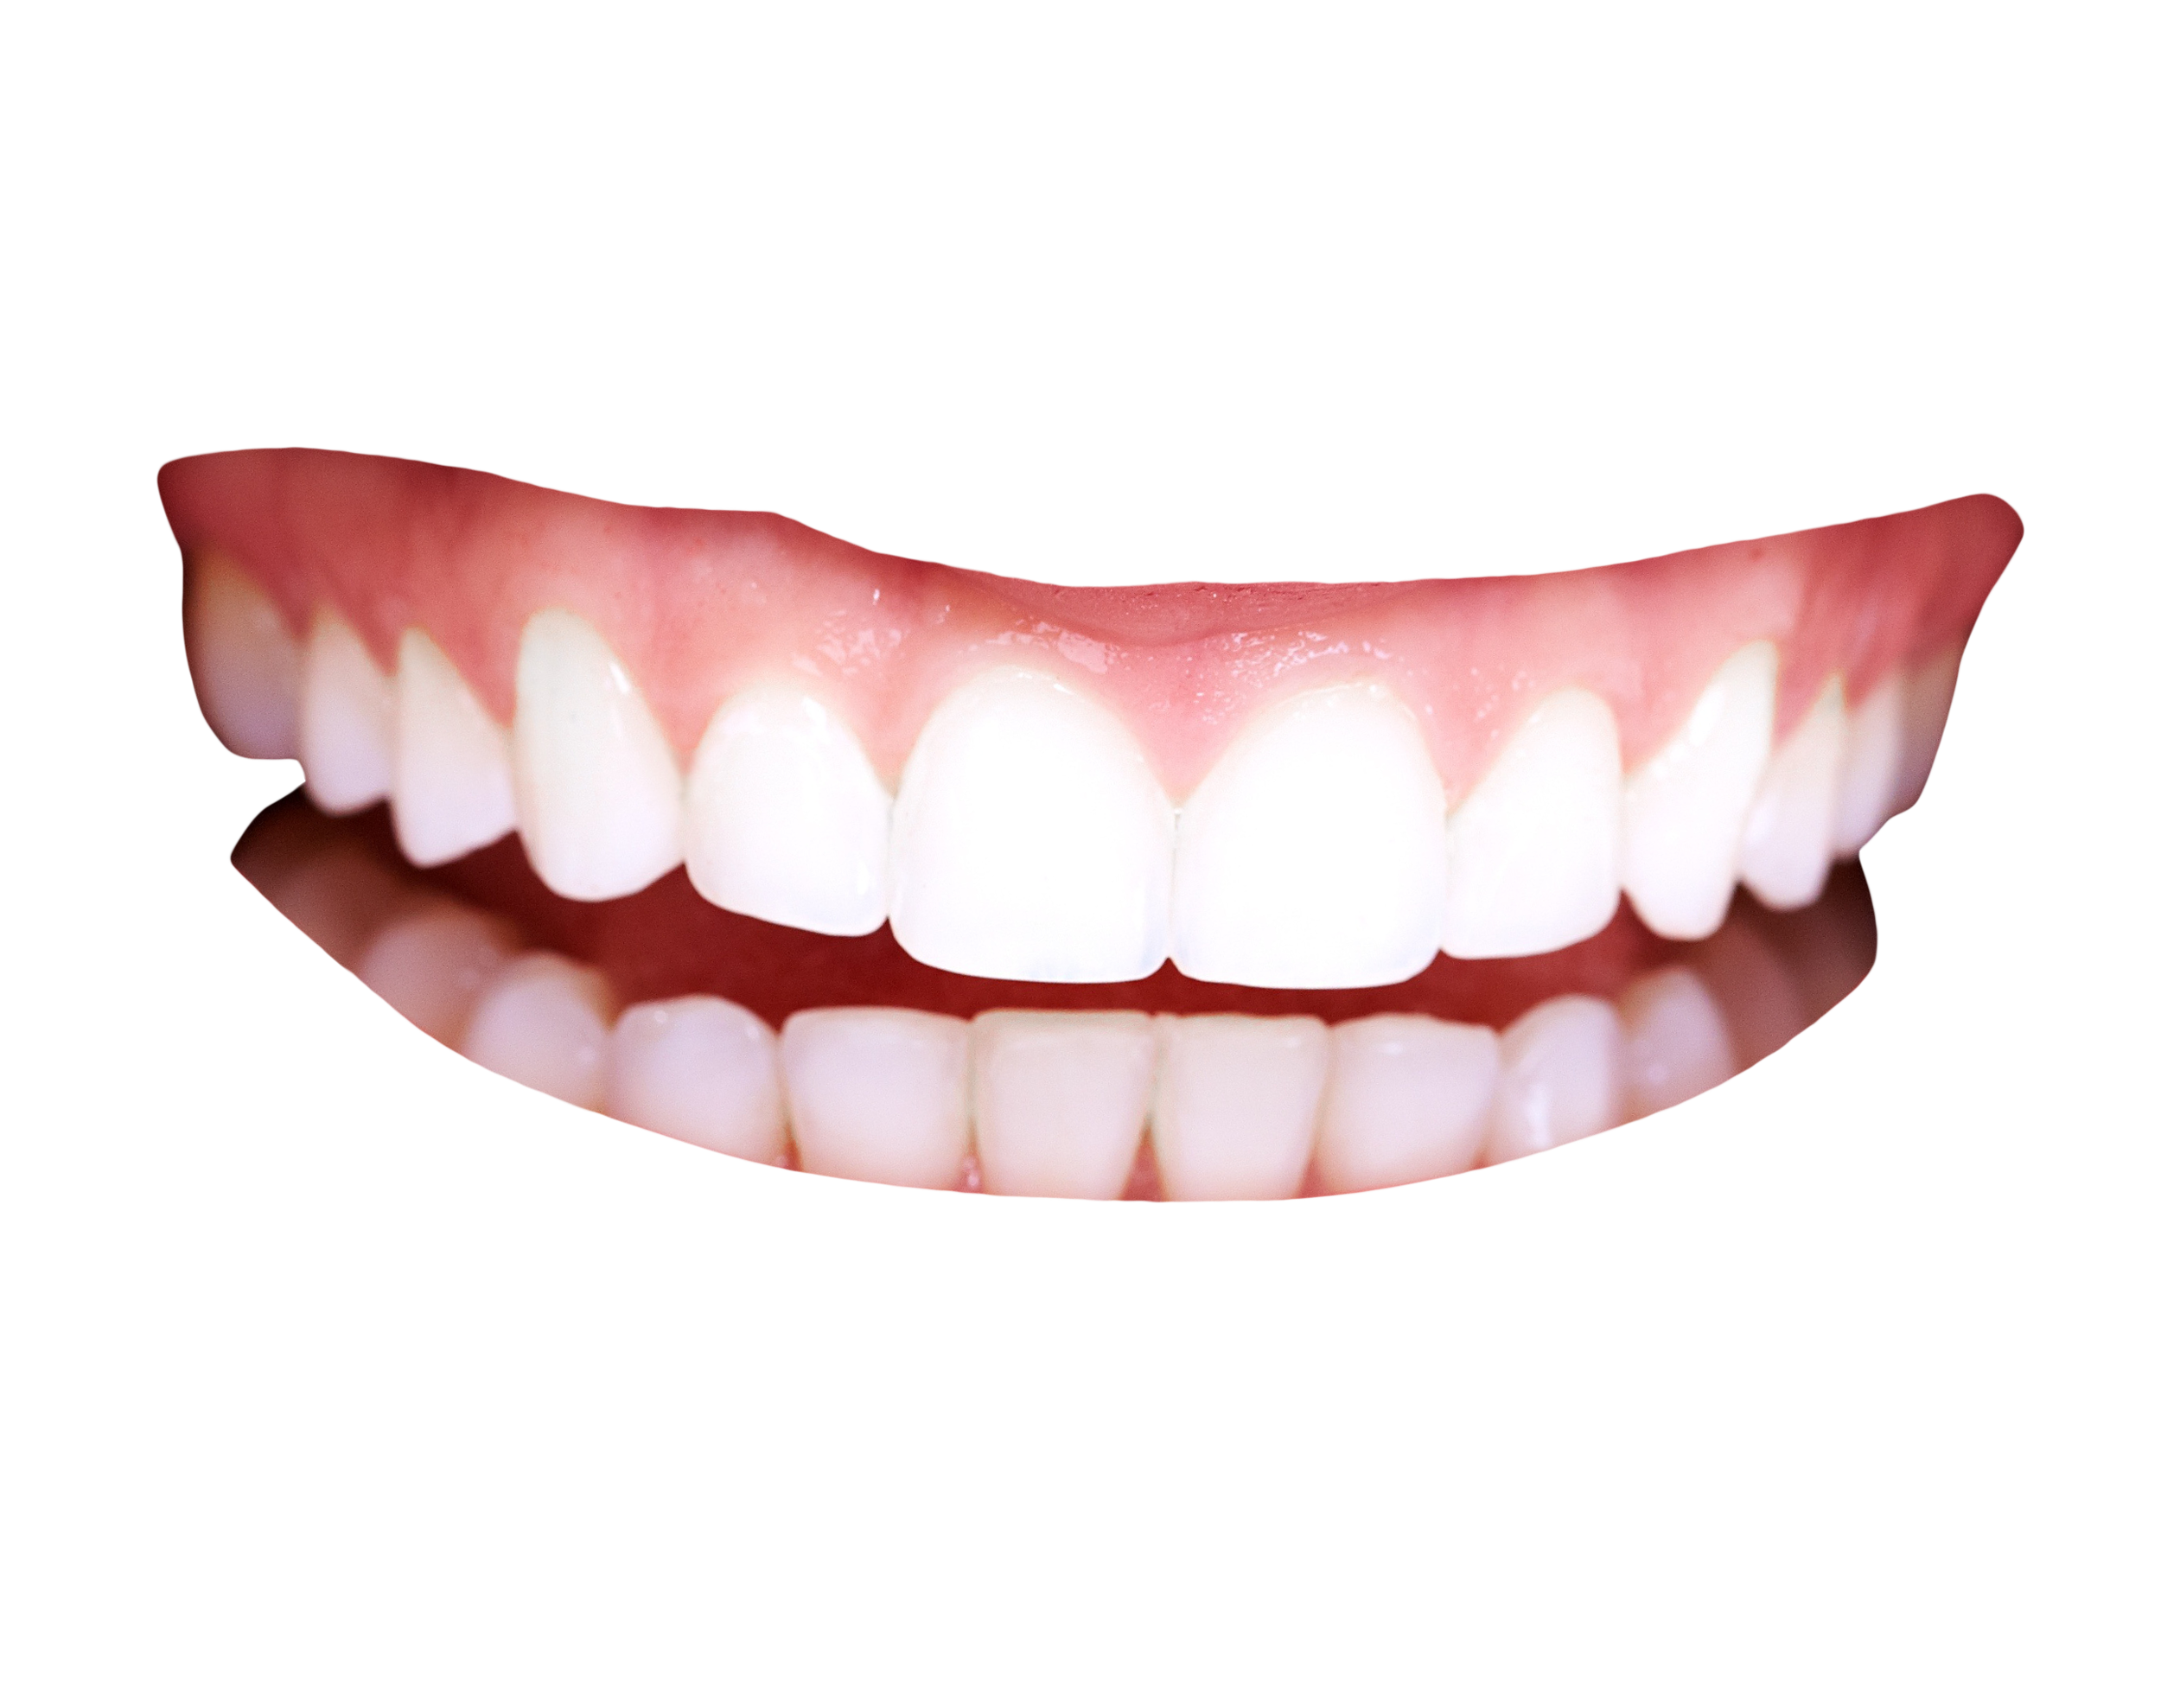 Teeth PNG-PlusPNG.com-1812